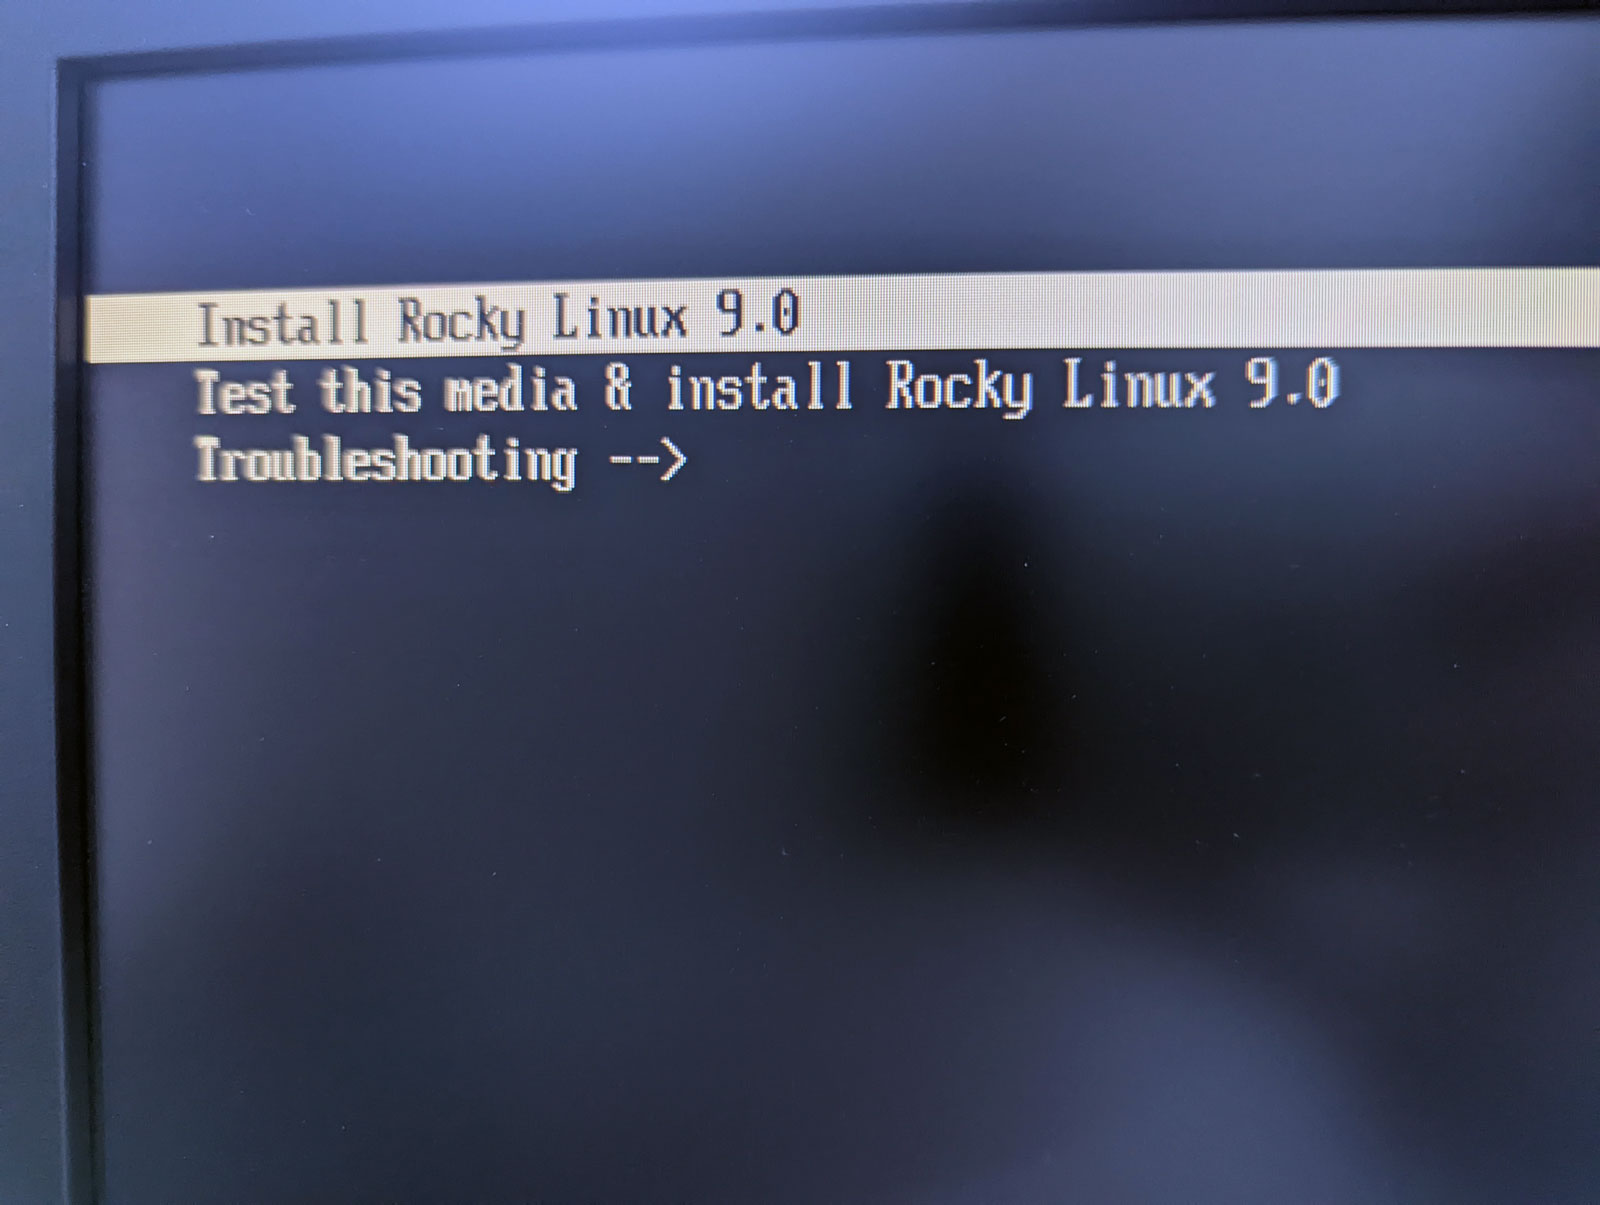 Install Rocky Linux 9.0